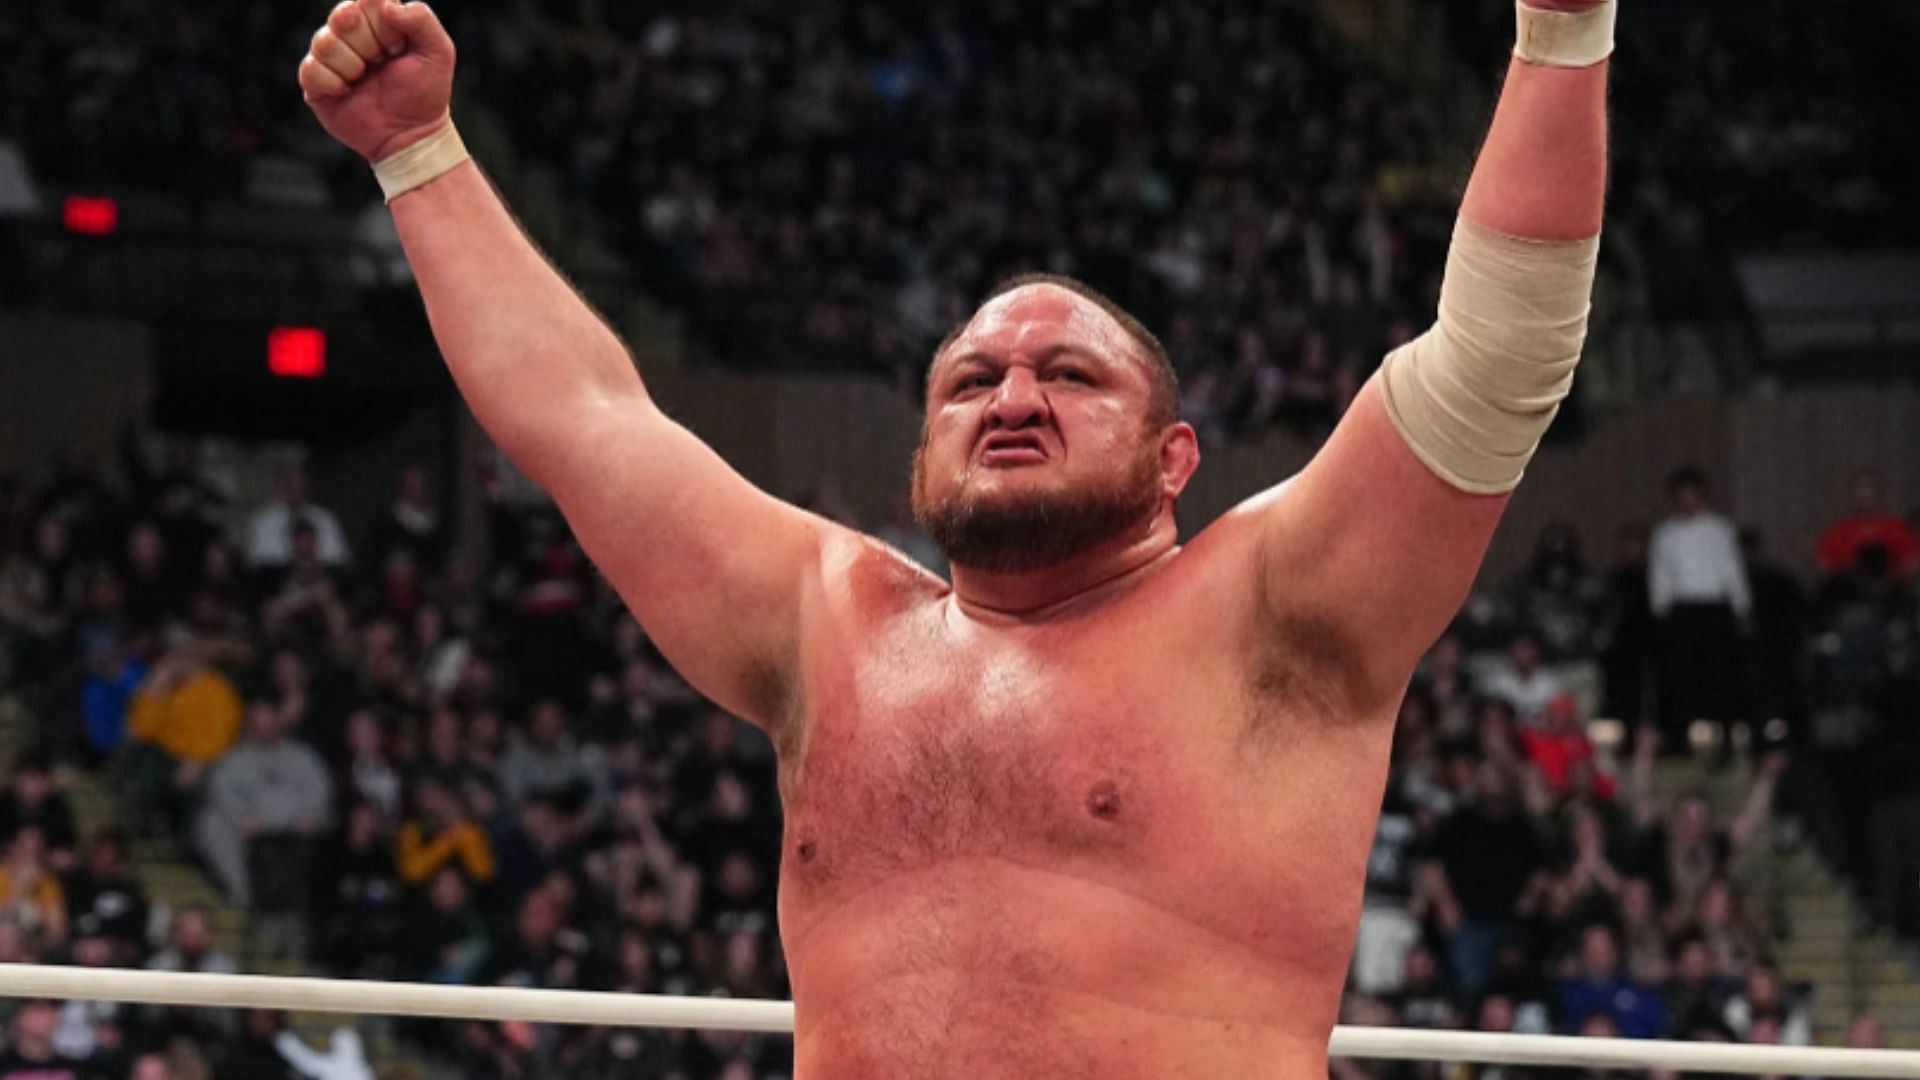 AEW World Champion Samoa Joe is open to a major dream match